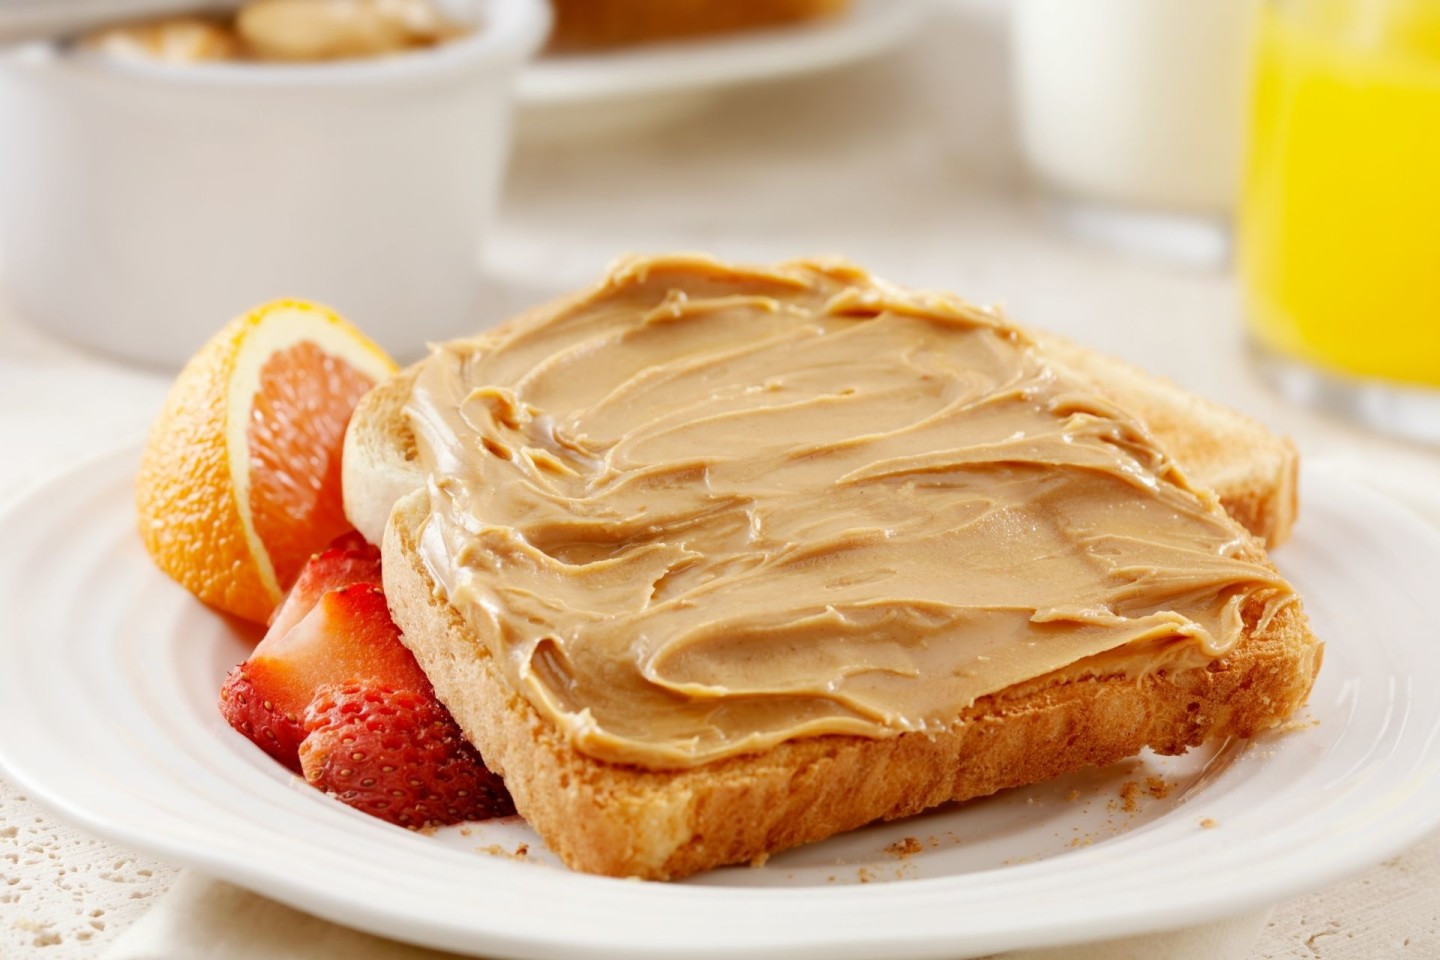 Peanut butter on toast with fruit, orange juice, and milk.